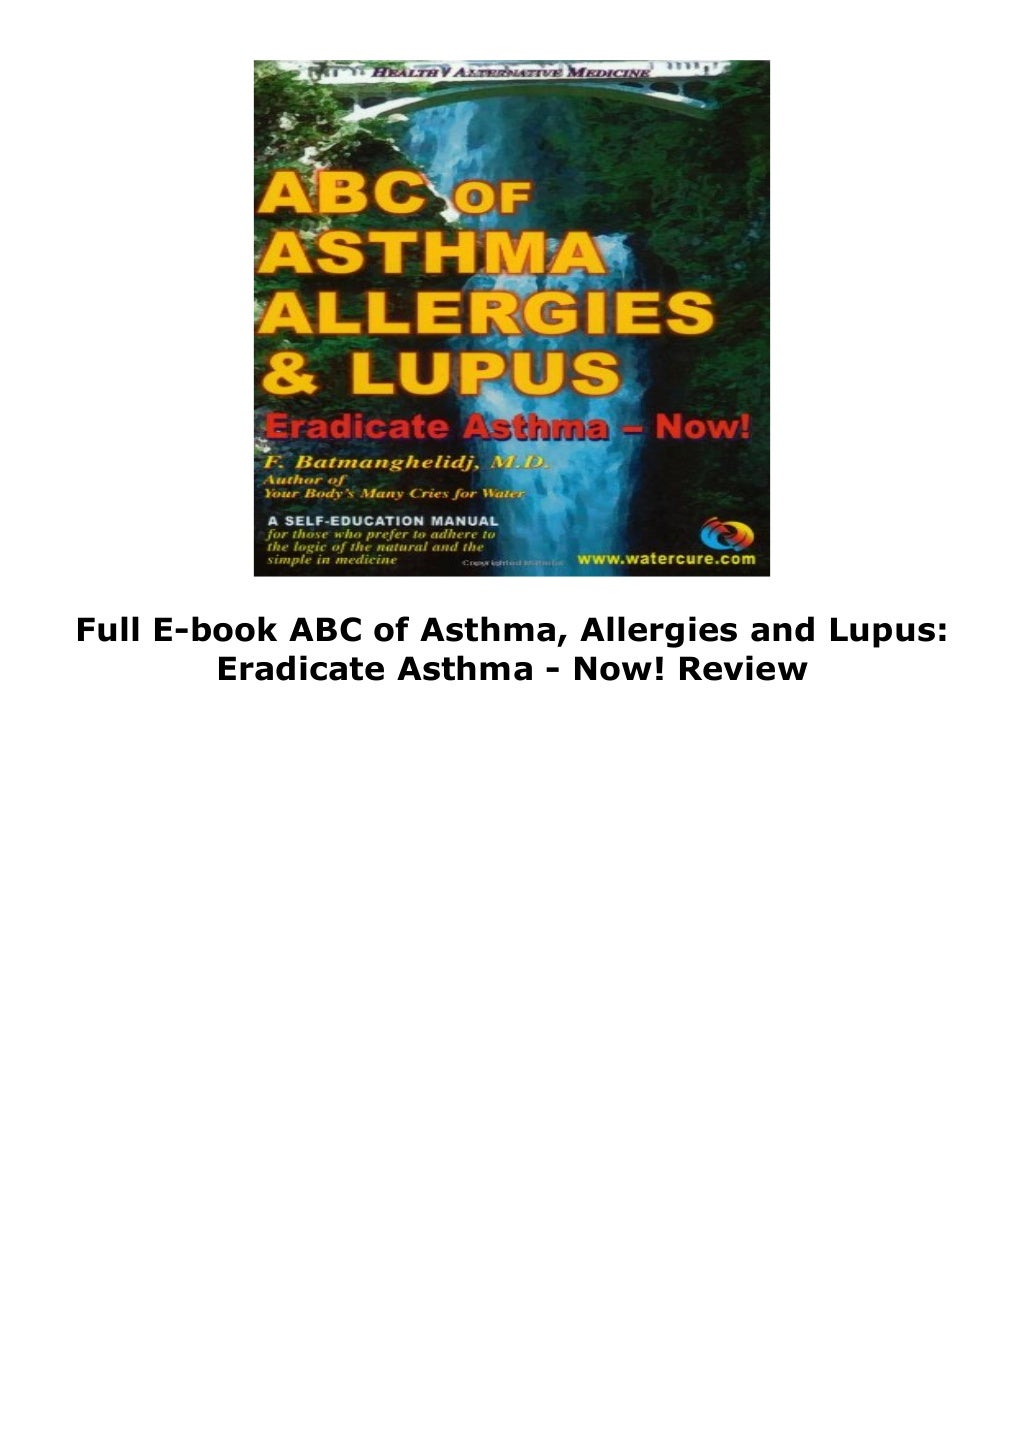 Full Ebook ABC of Asthma, Allergies and Lupus Eradicate Asthma